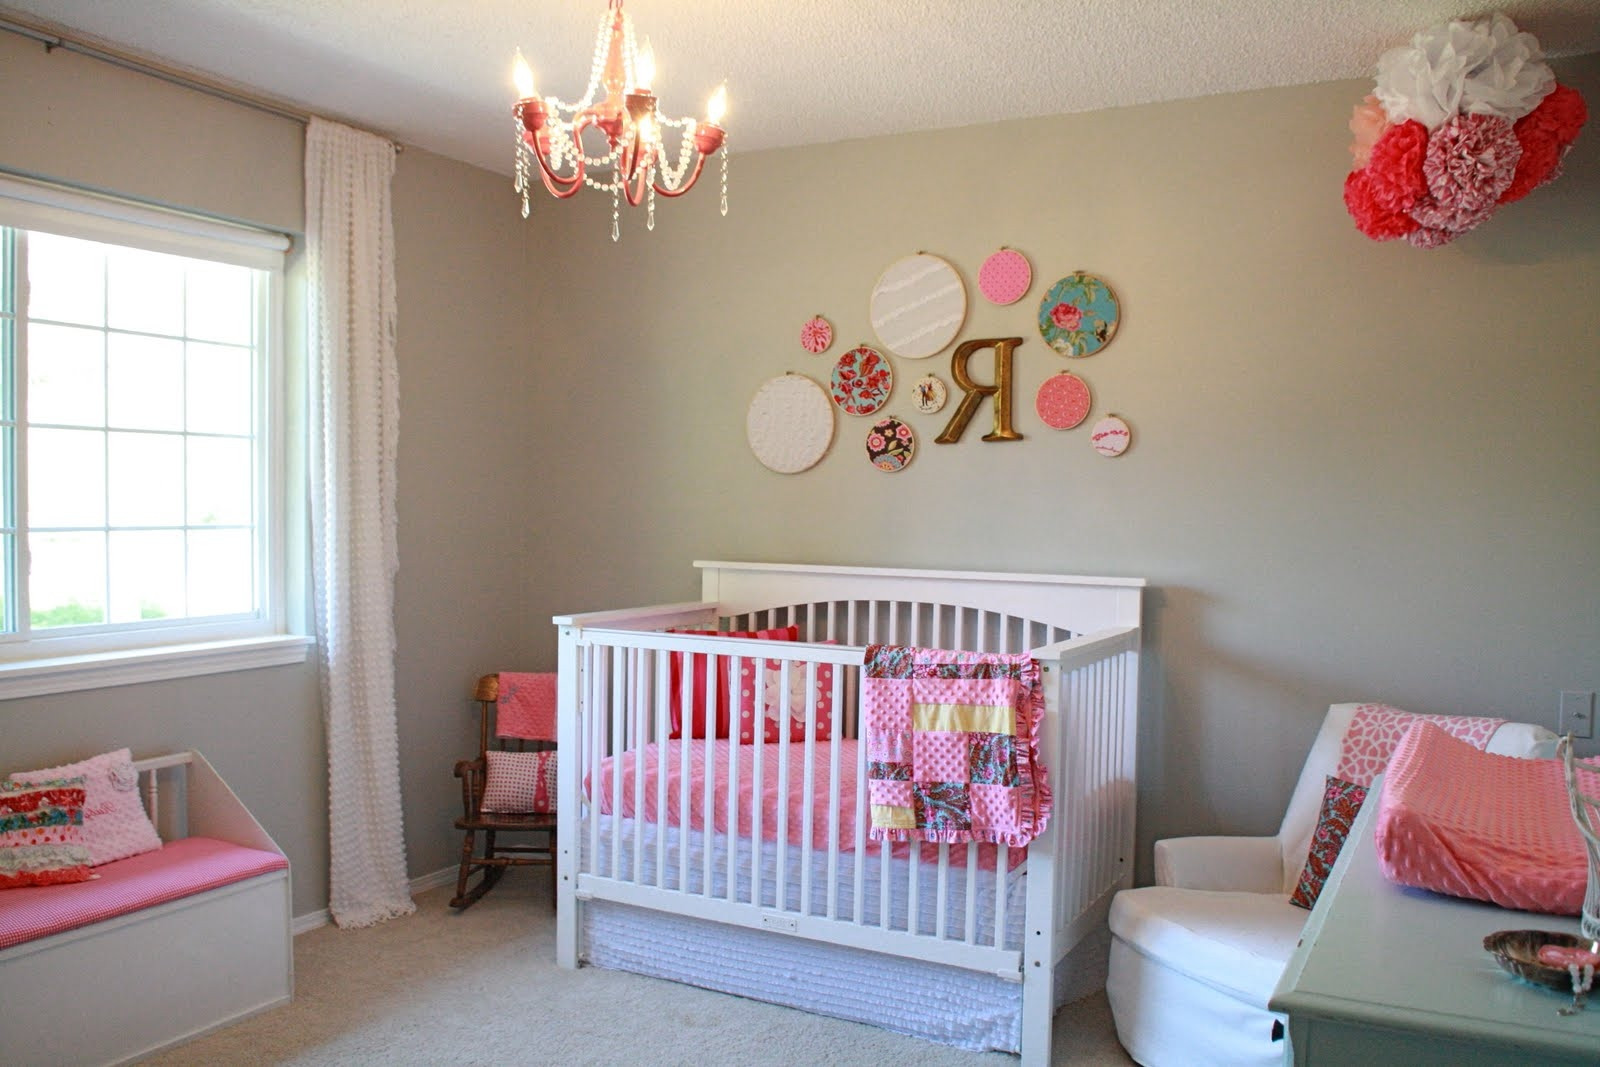 Newborn Baby Girl Room Decorations
 Baby Girl Room Decor Ideas